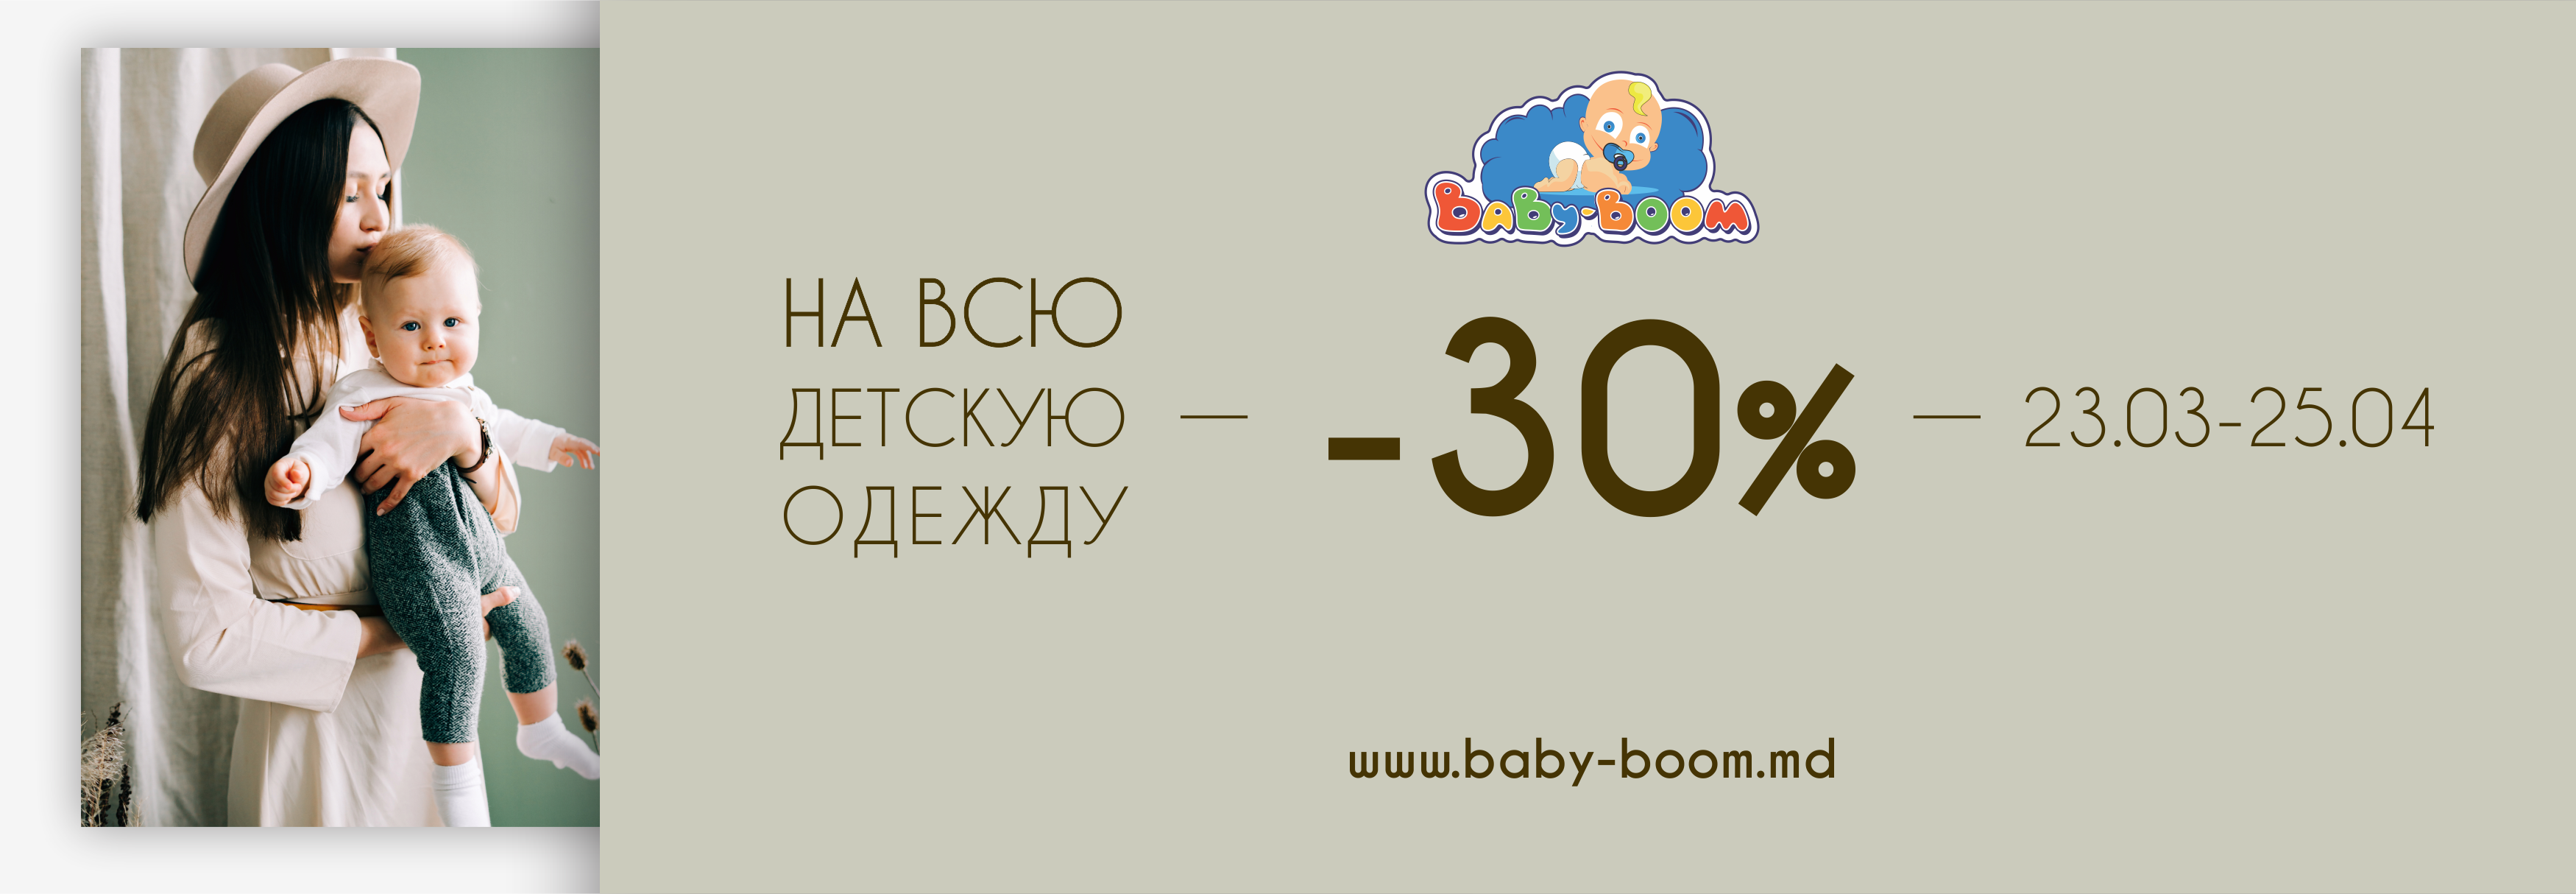 odezhda-30-do-2504